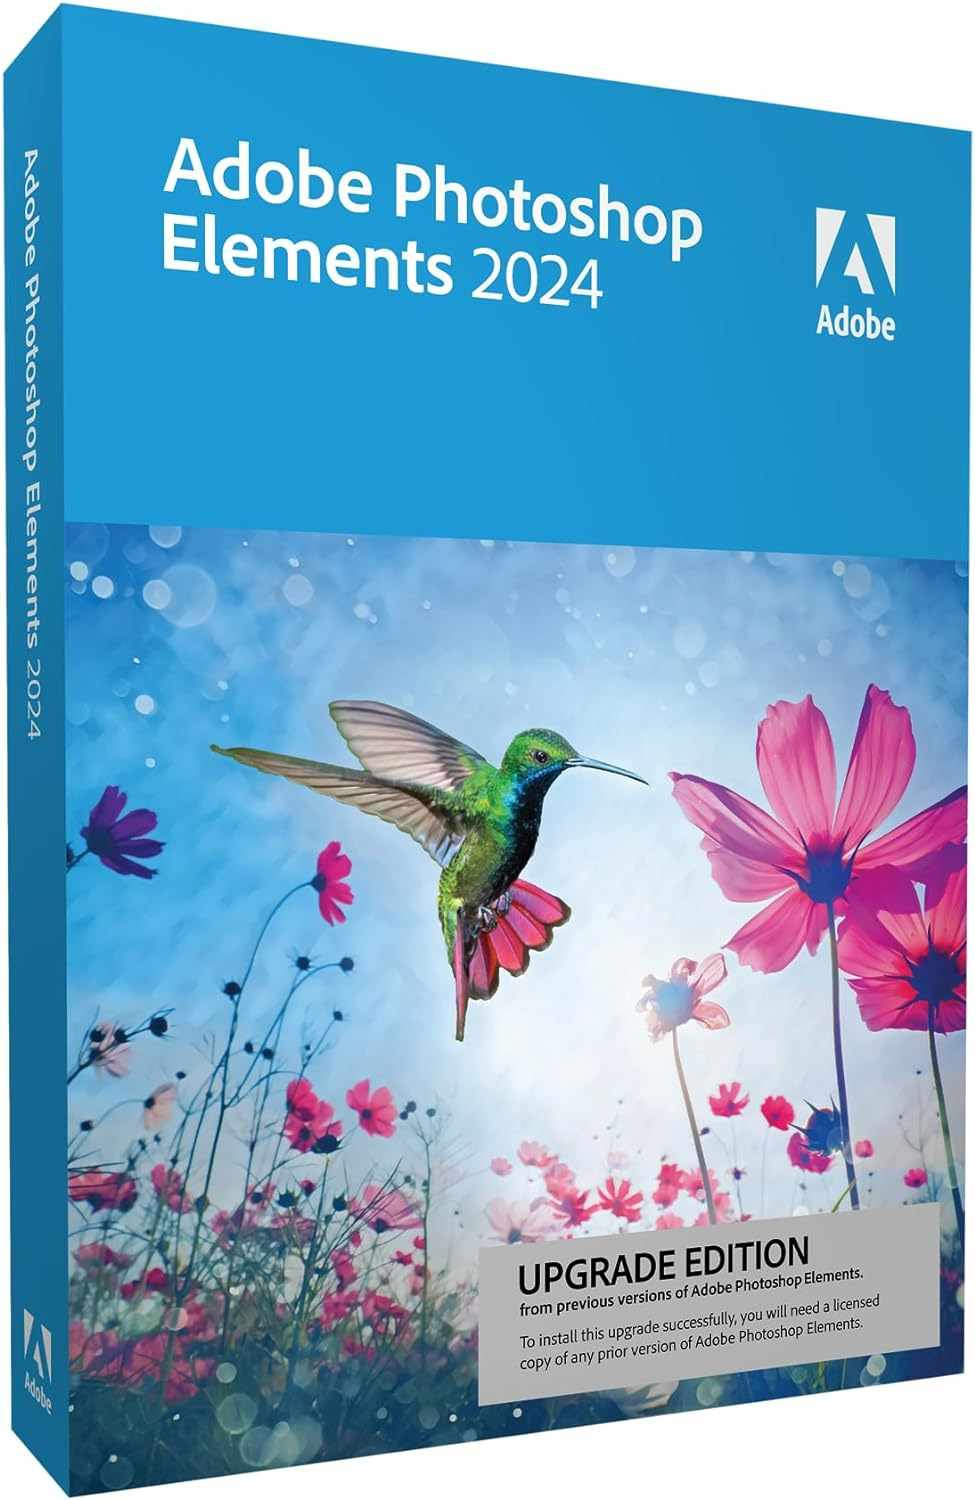 Adobe Elements 2024 MP ENG UPG BOX MEGABYTE, s.r.o.